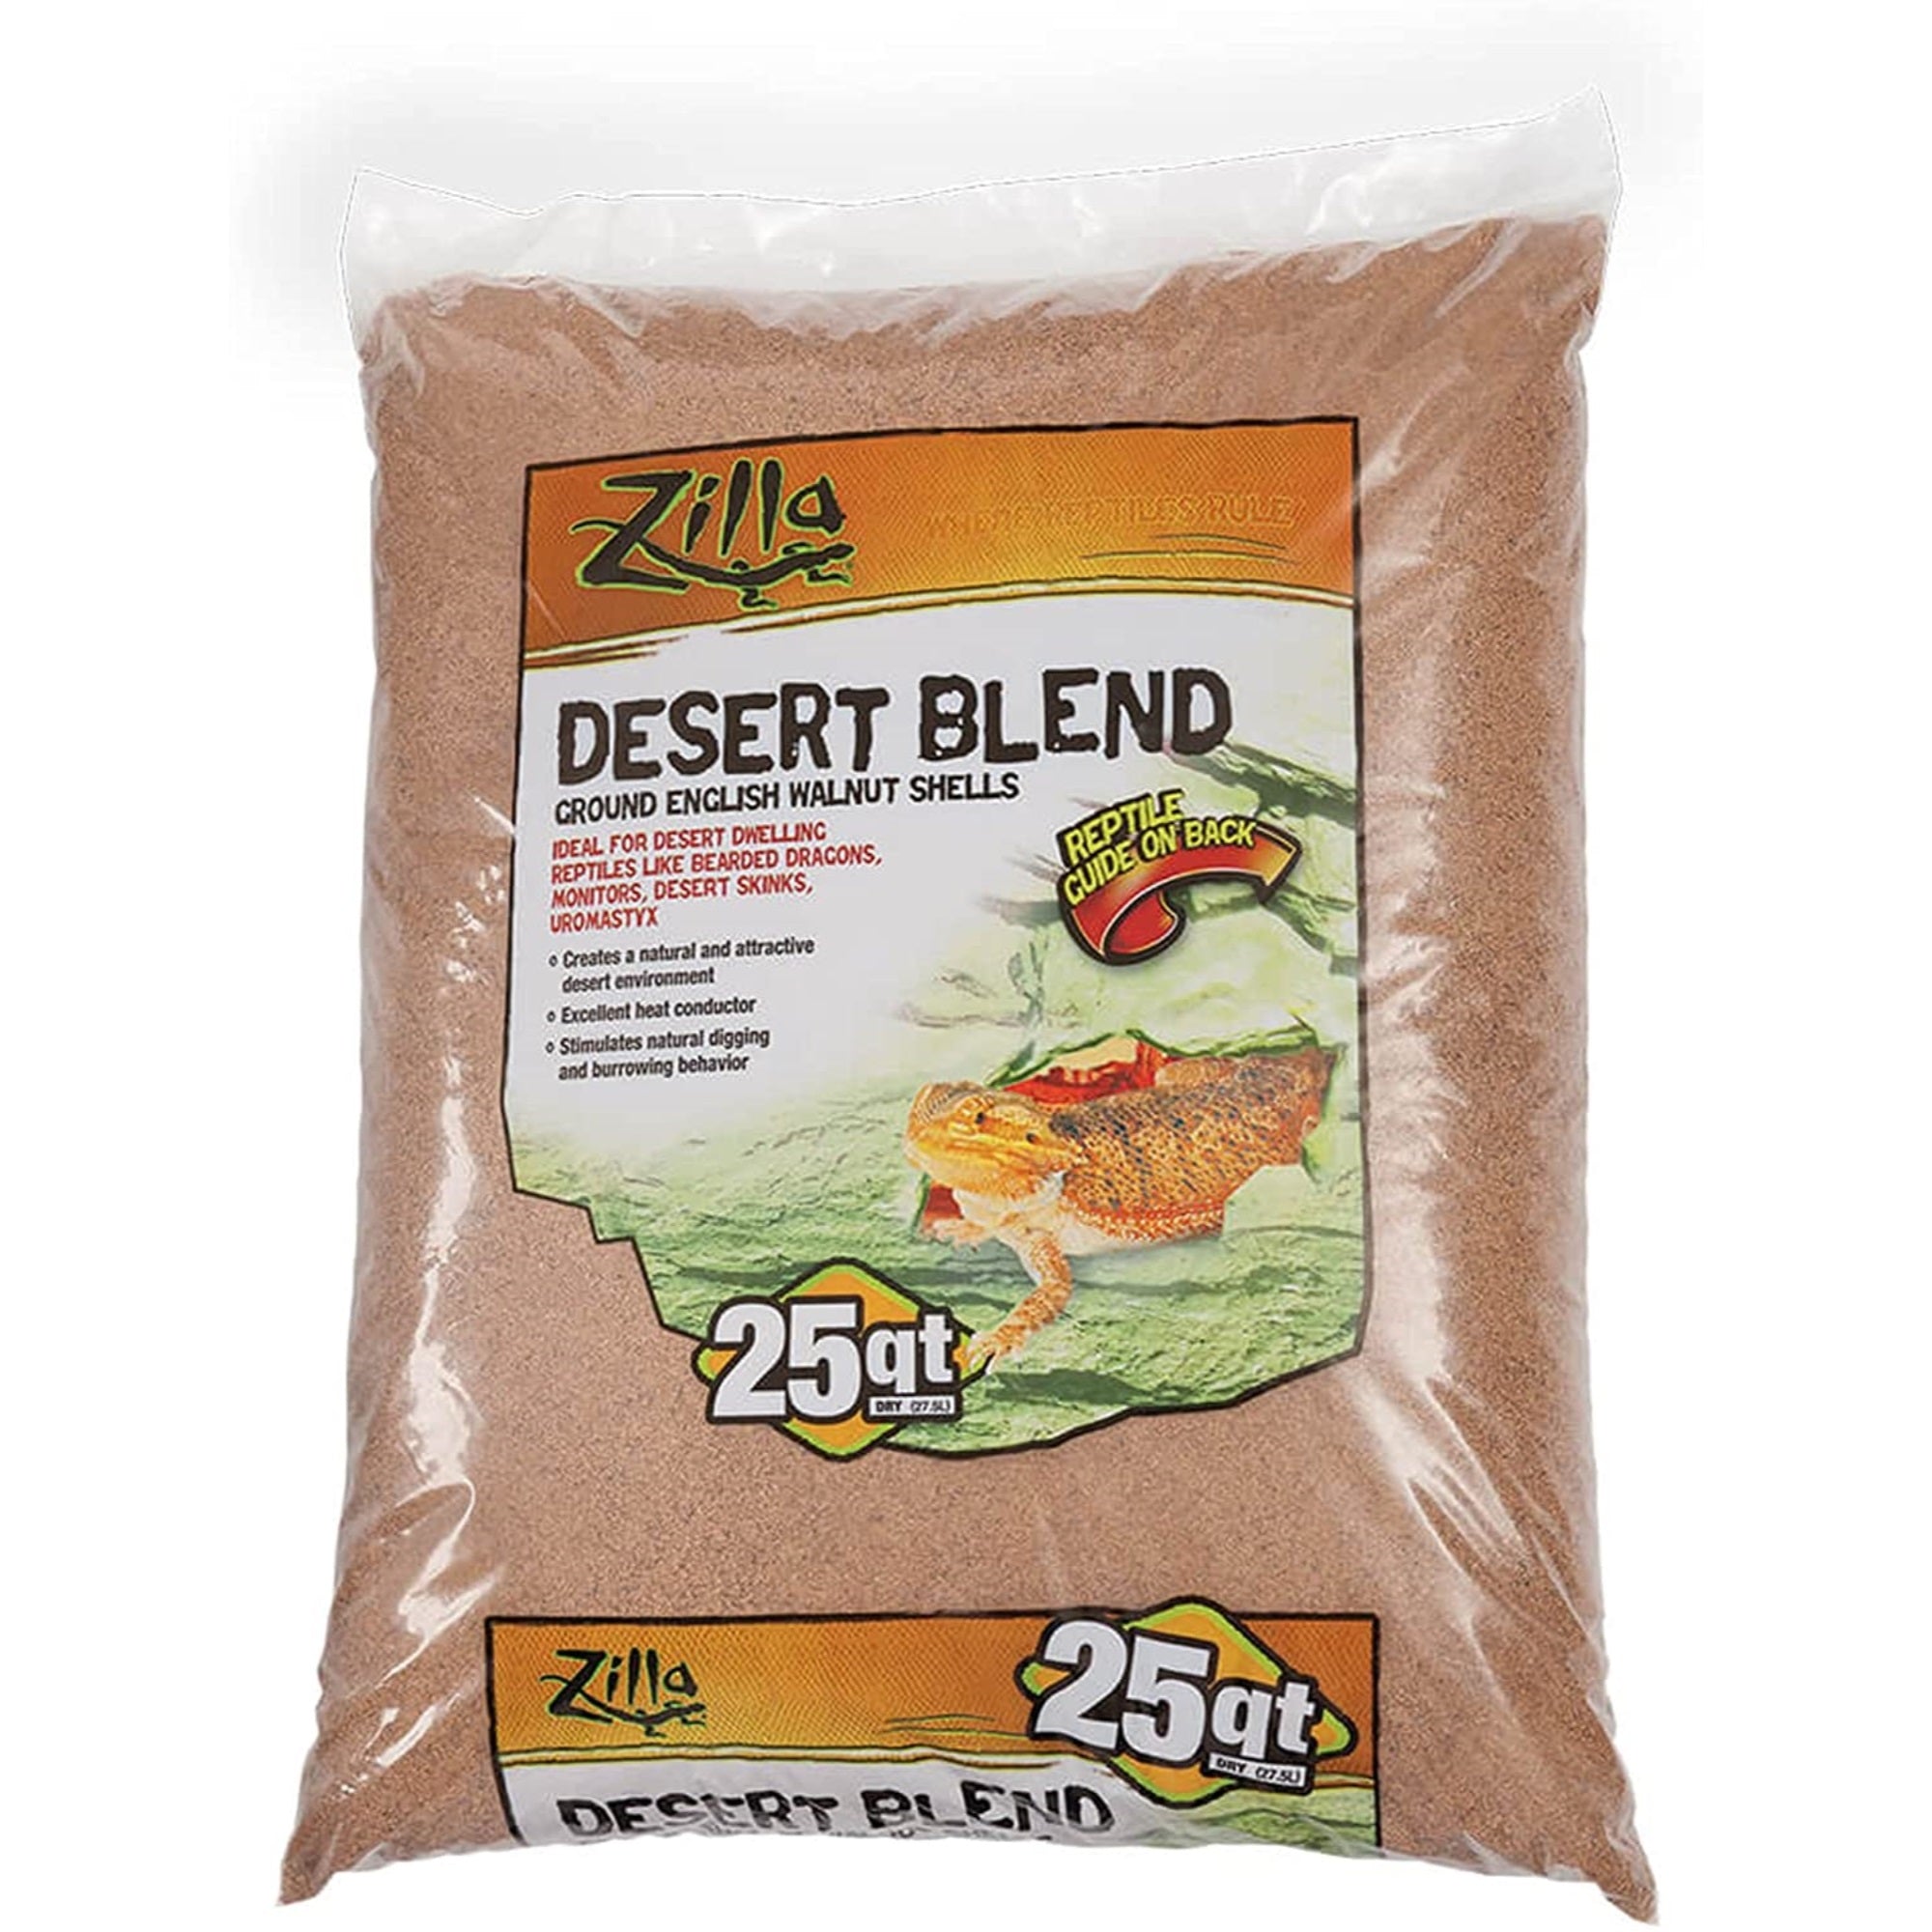 Zilla Heat Conducting Ground English Walnut Shells Desert Blend, 25 qt